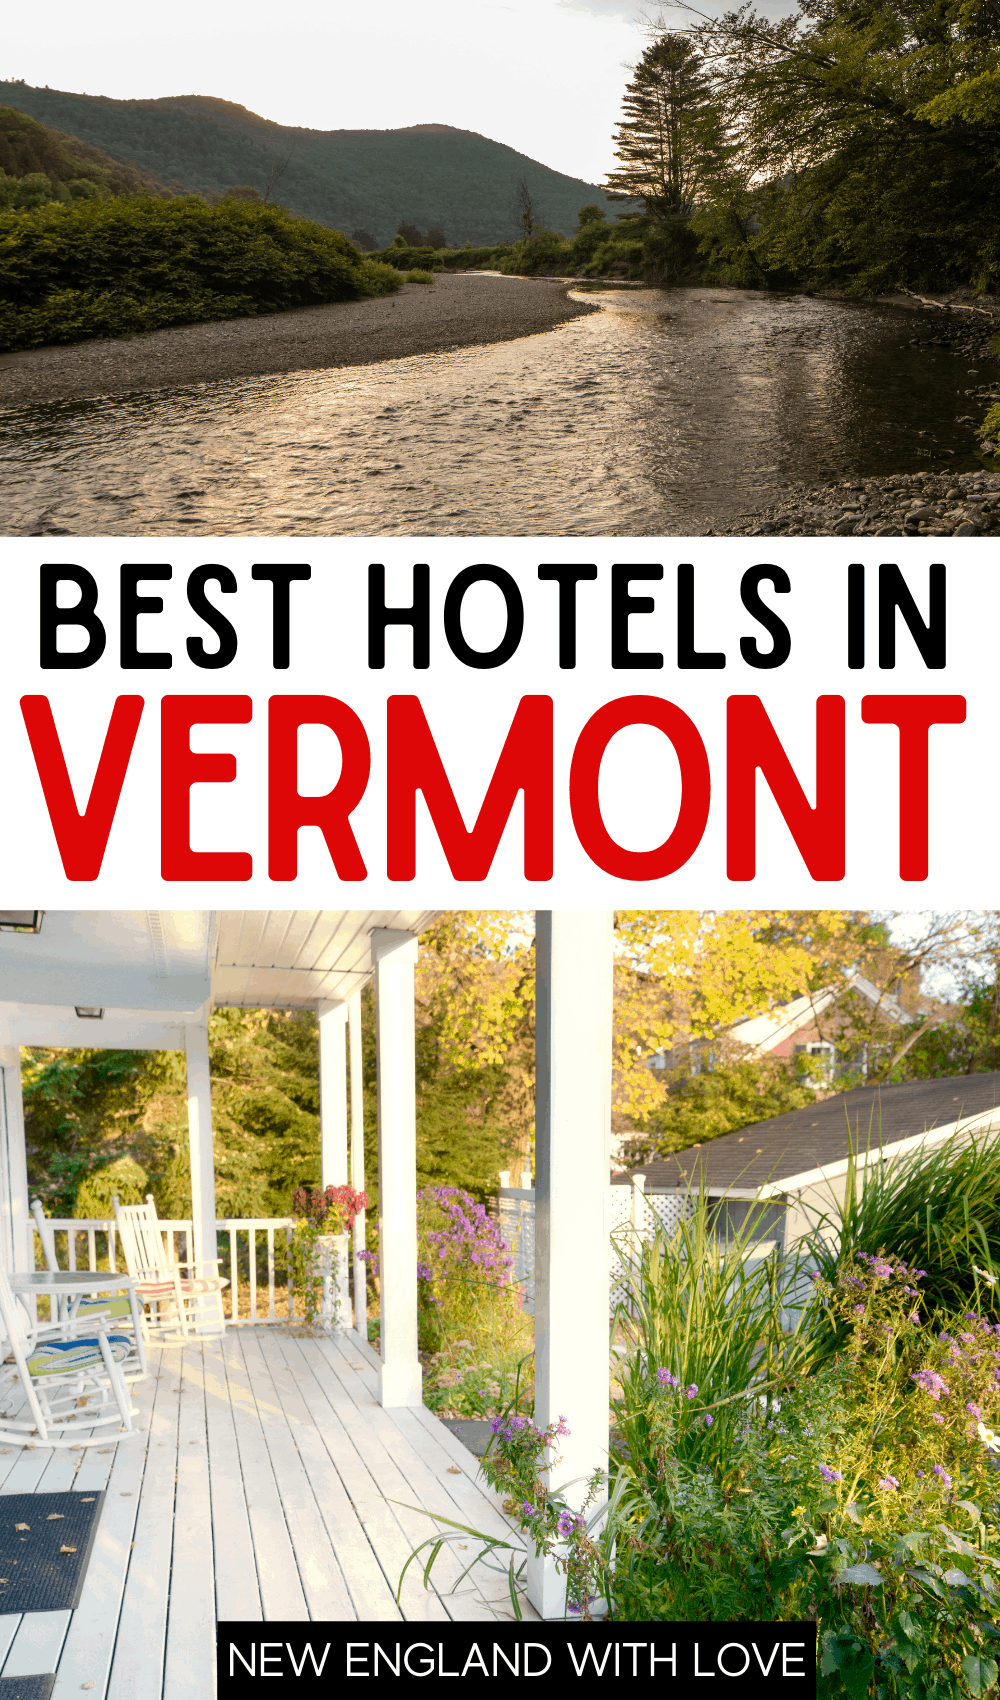 Pinterest graphic reading "BEST HOTELS IN VERMONT"